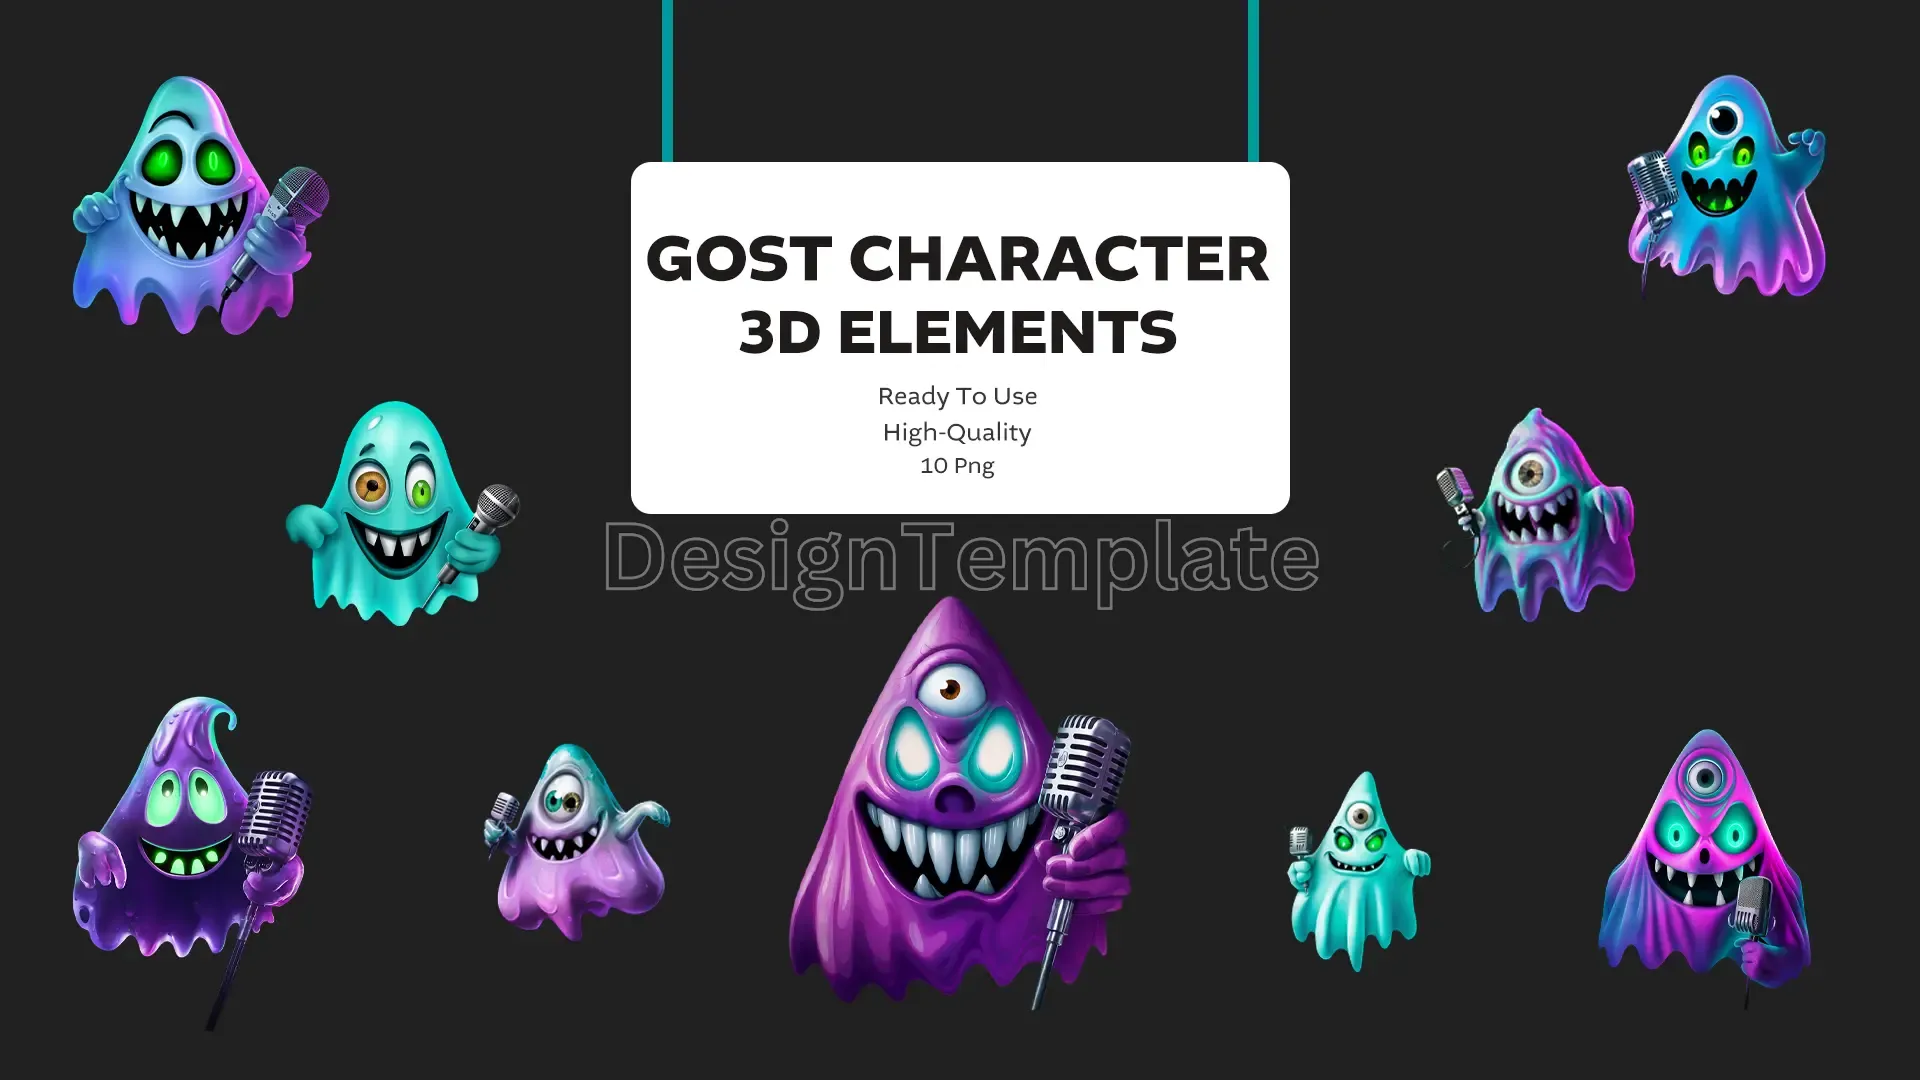 Phantom Features Exquisite 3D Ghost Elements